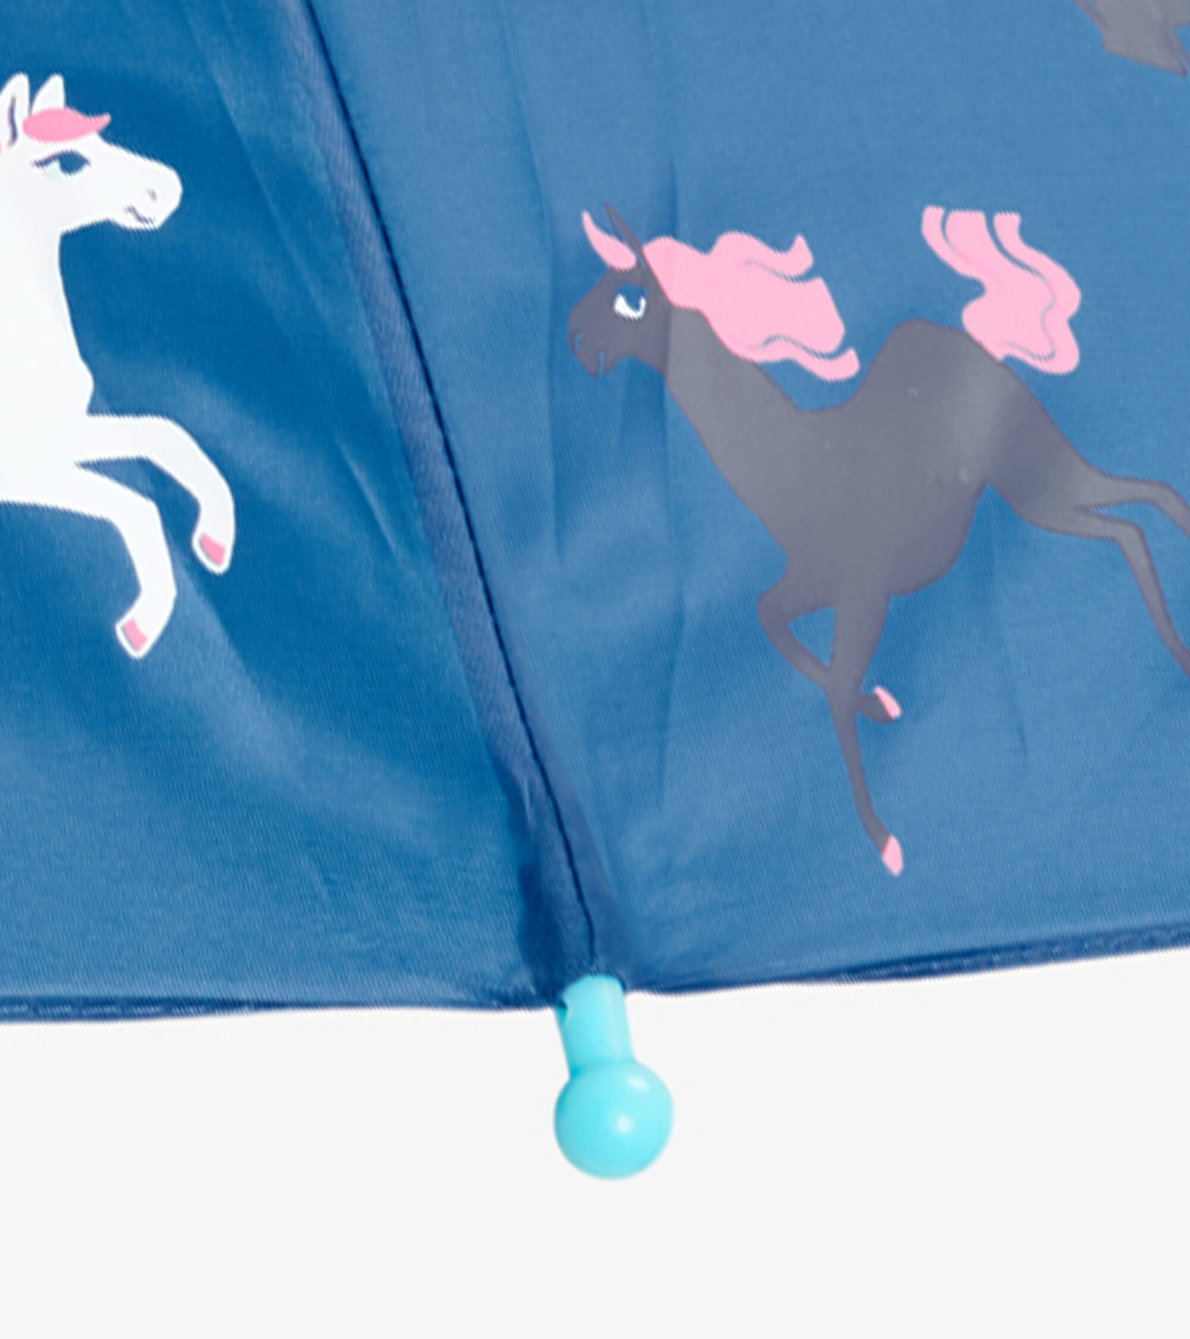 View larger image of Prancing Horses Colour Changing Kids Umbrella